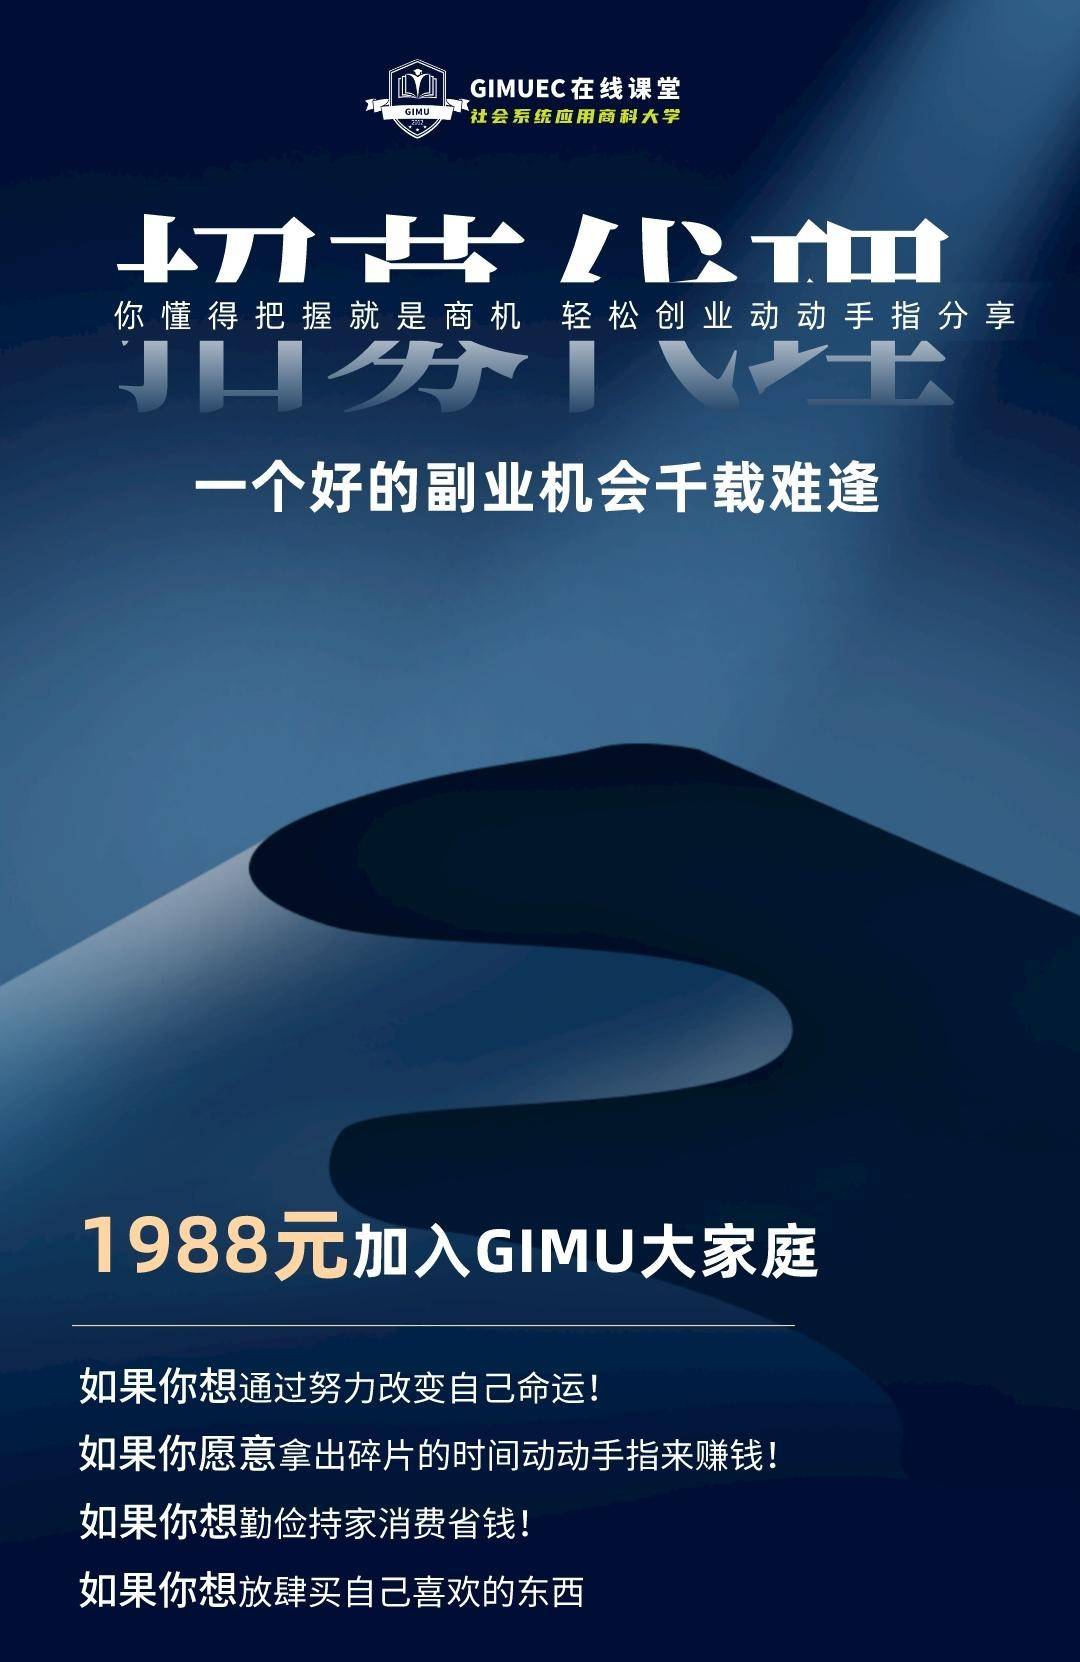 168sports-招募GIMUEC在线课堂课程合伙人|荣畅启迪教育集团GIMU学习平台